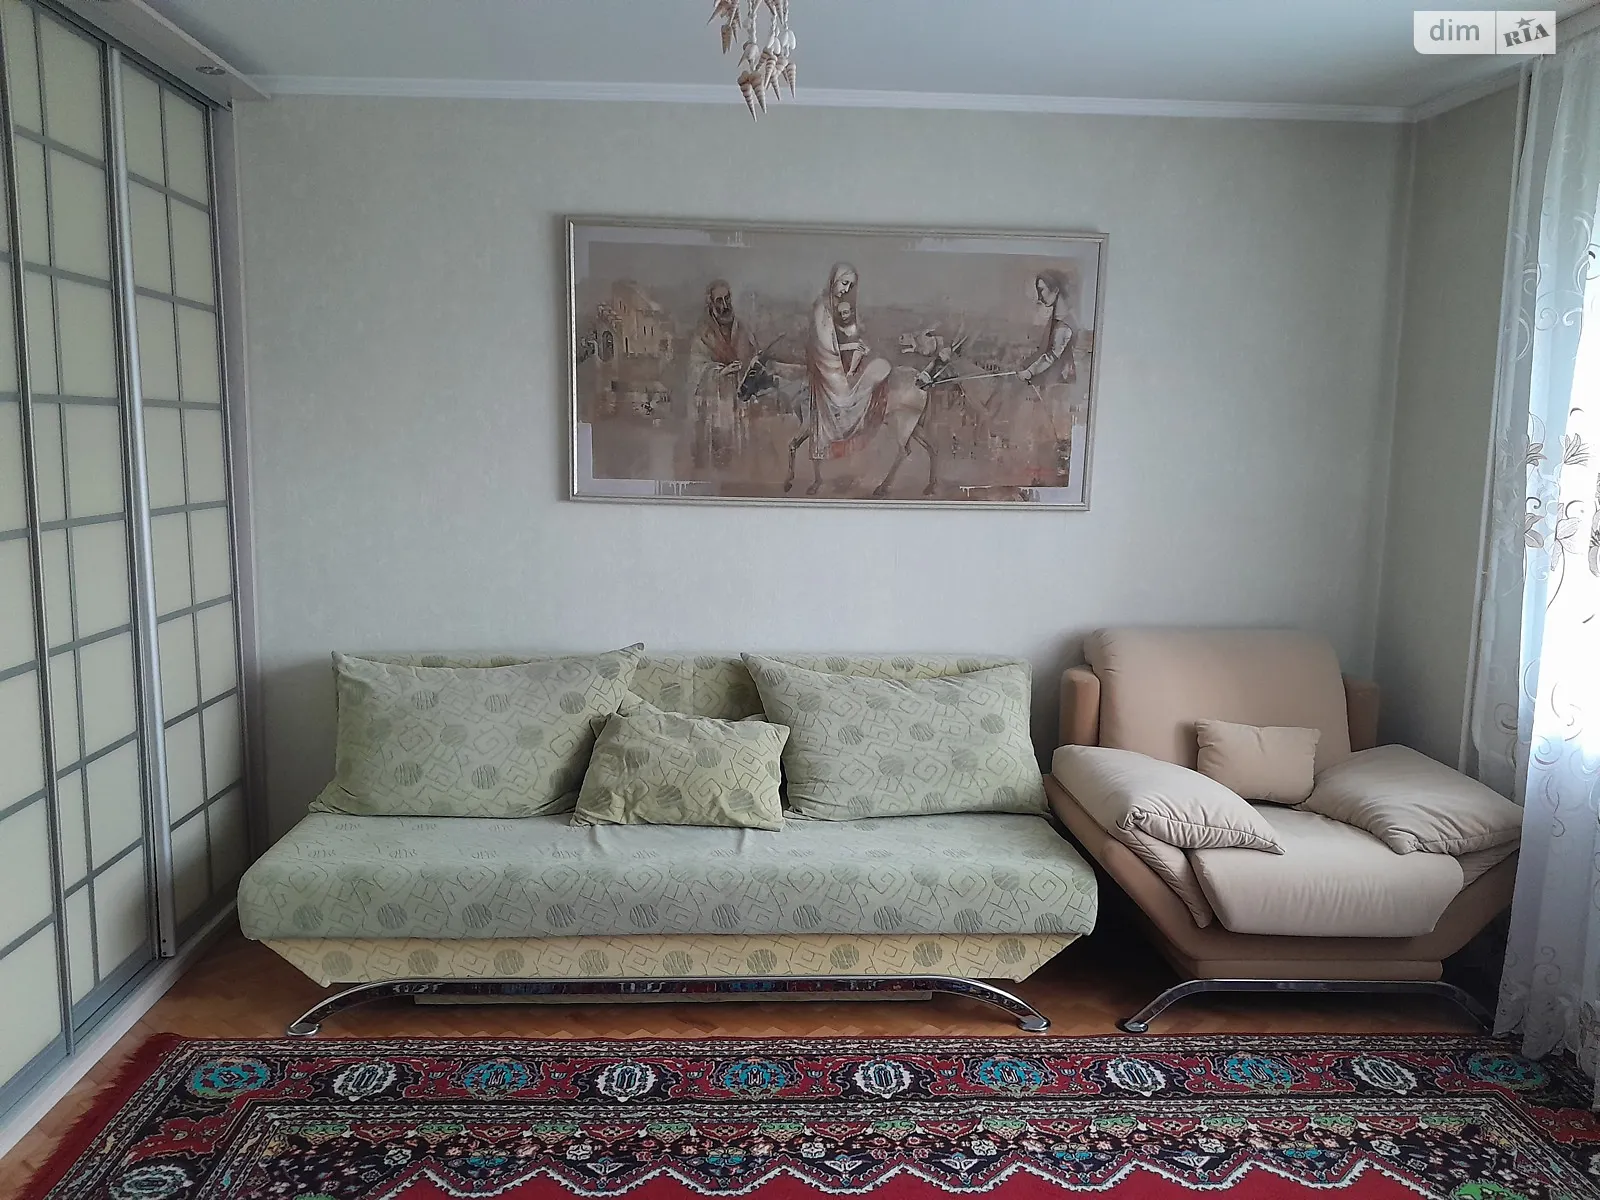 Сдается в аренду 2-комнатная квартира 58 кв. м в Киеве, ул. Левка Лукьяненко, 18 - фото 1